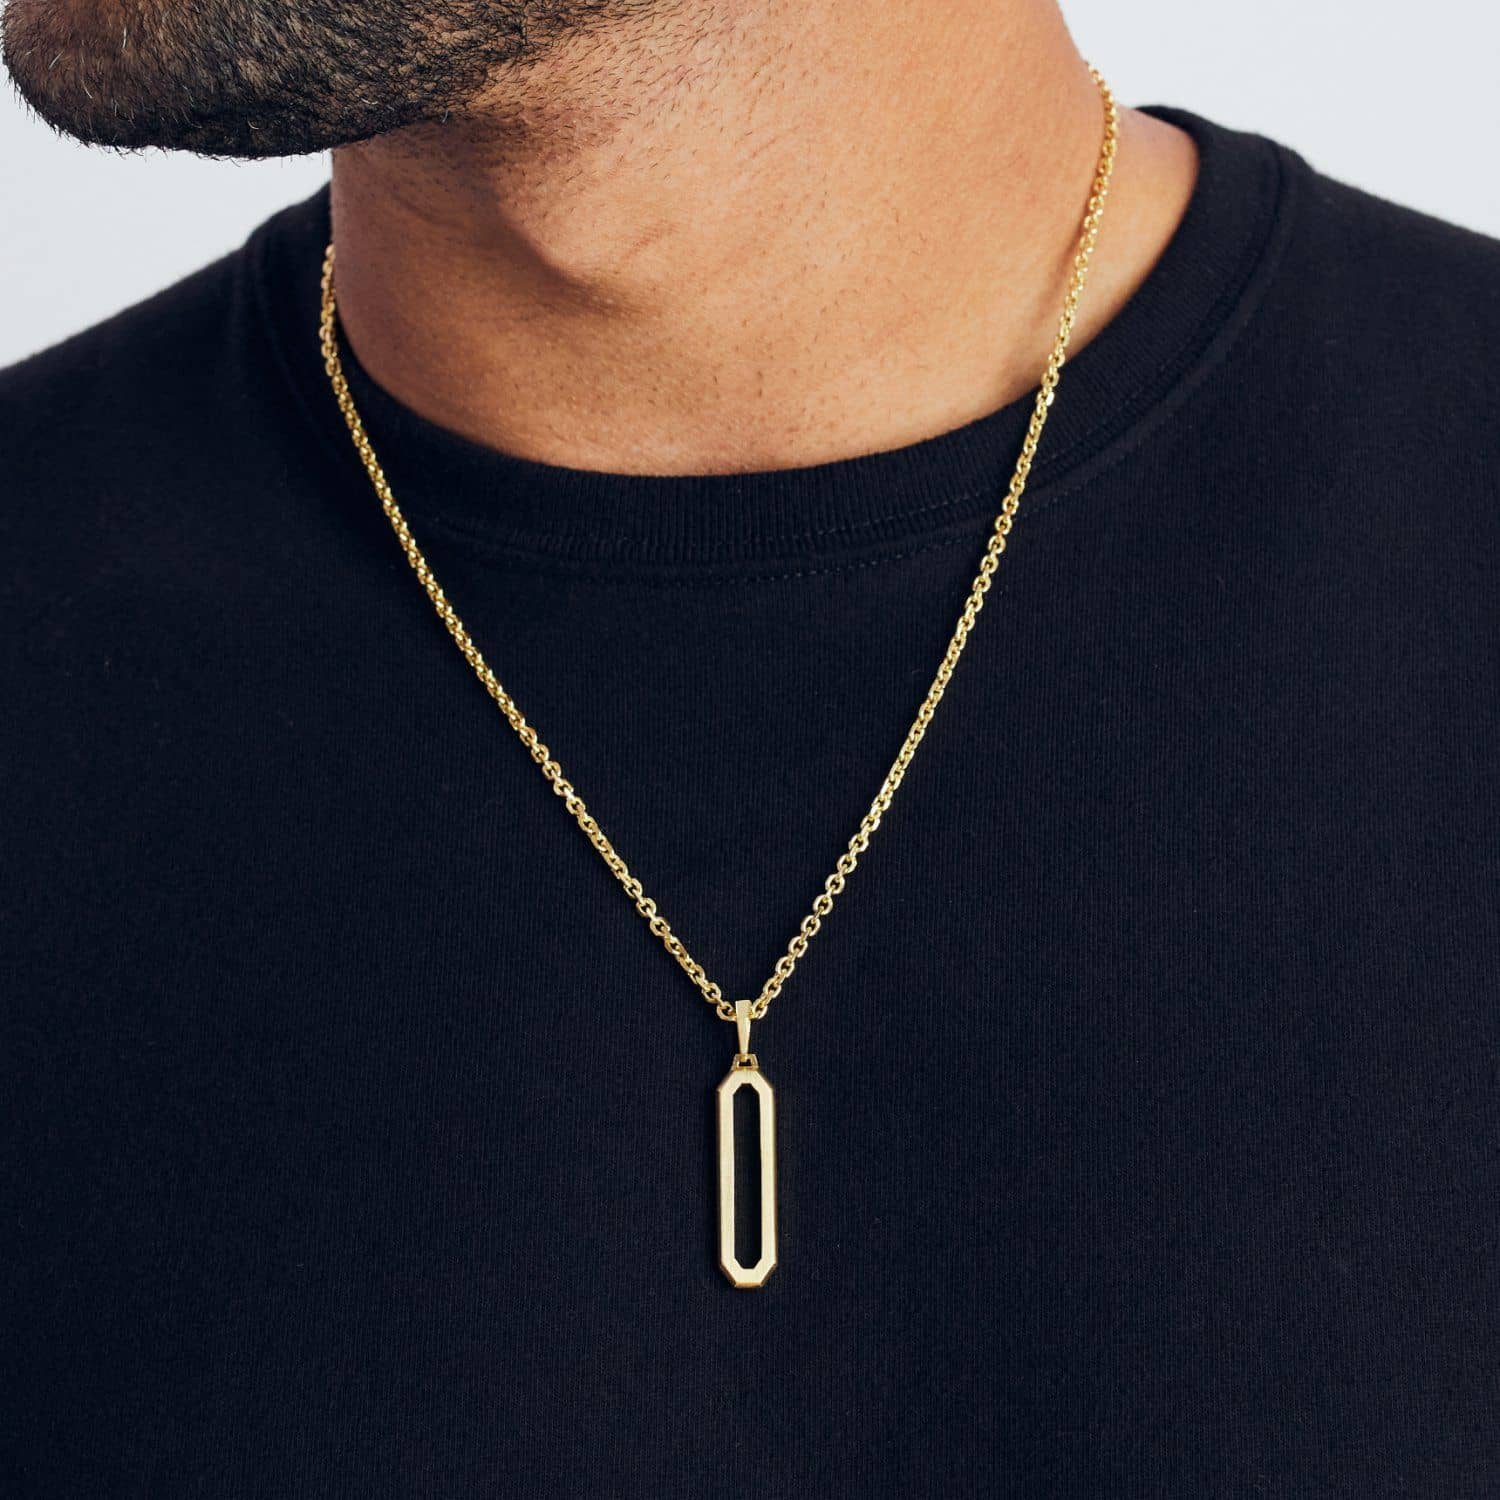 The Pillar Pendant | Solid Gold Pendant for Your Chain | JAXXON